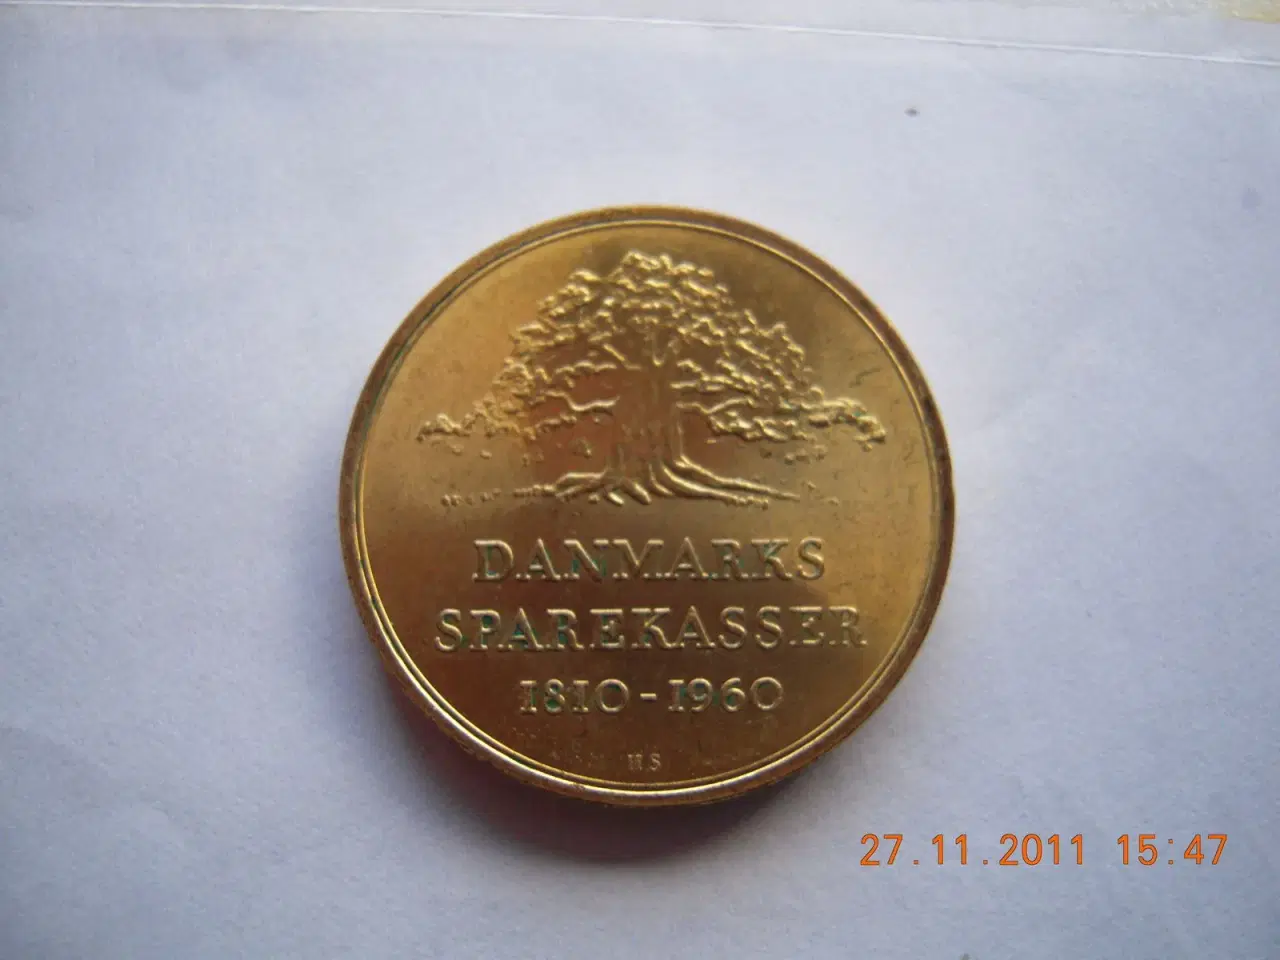 Billede 1 - Sparekassemedalje 150 år 1810-1960